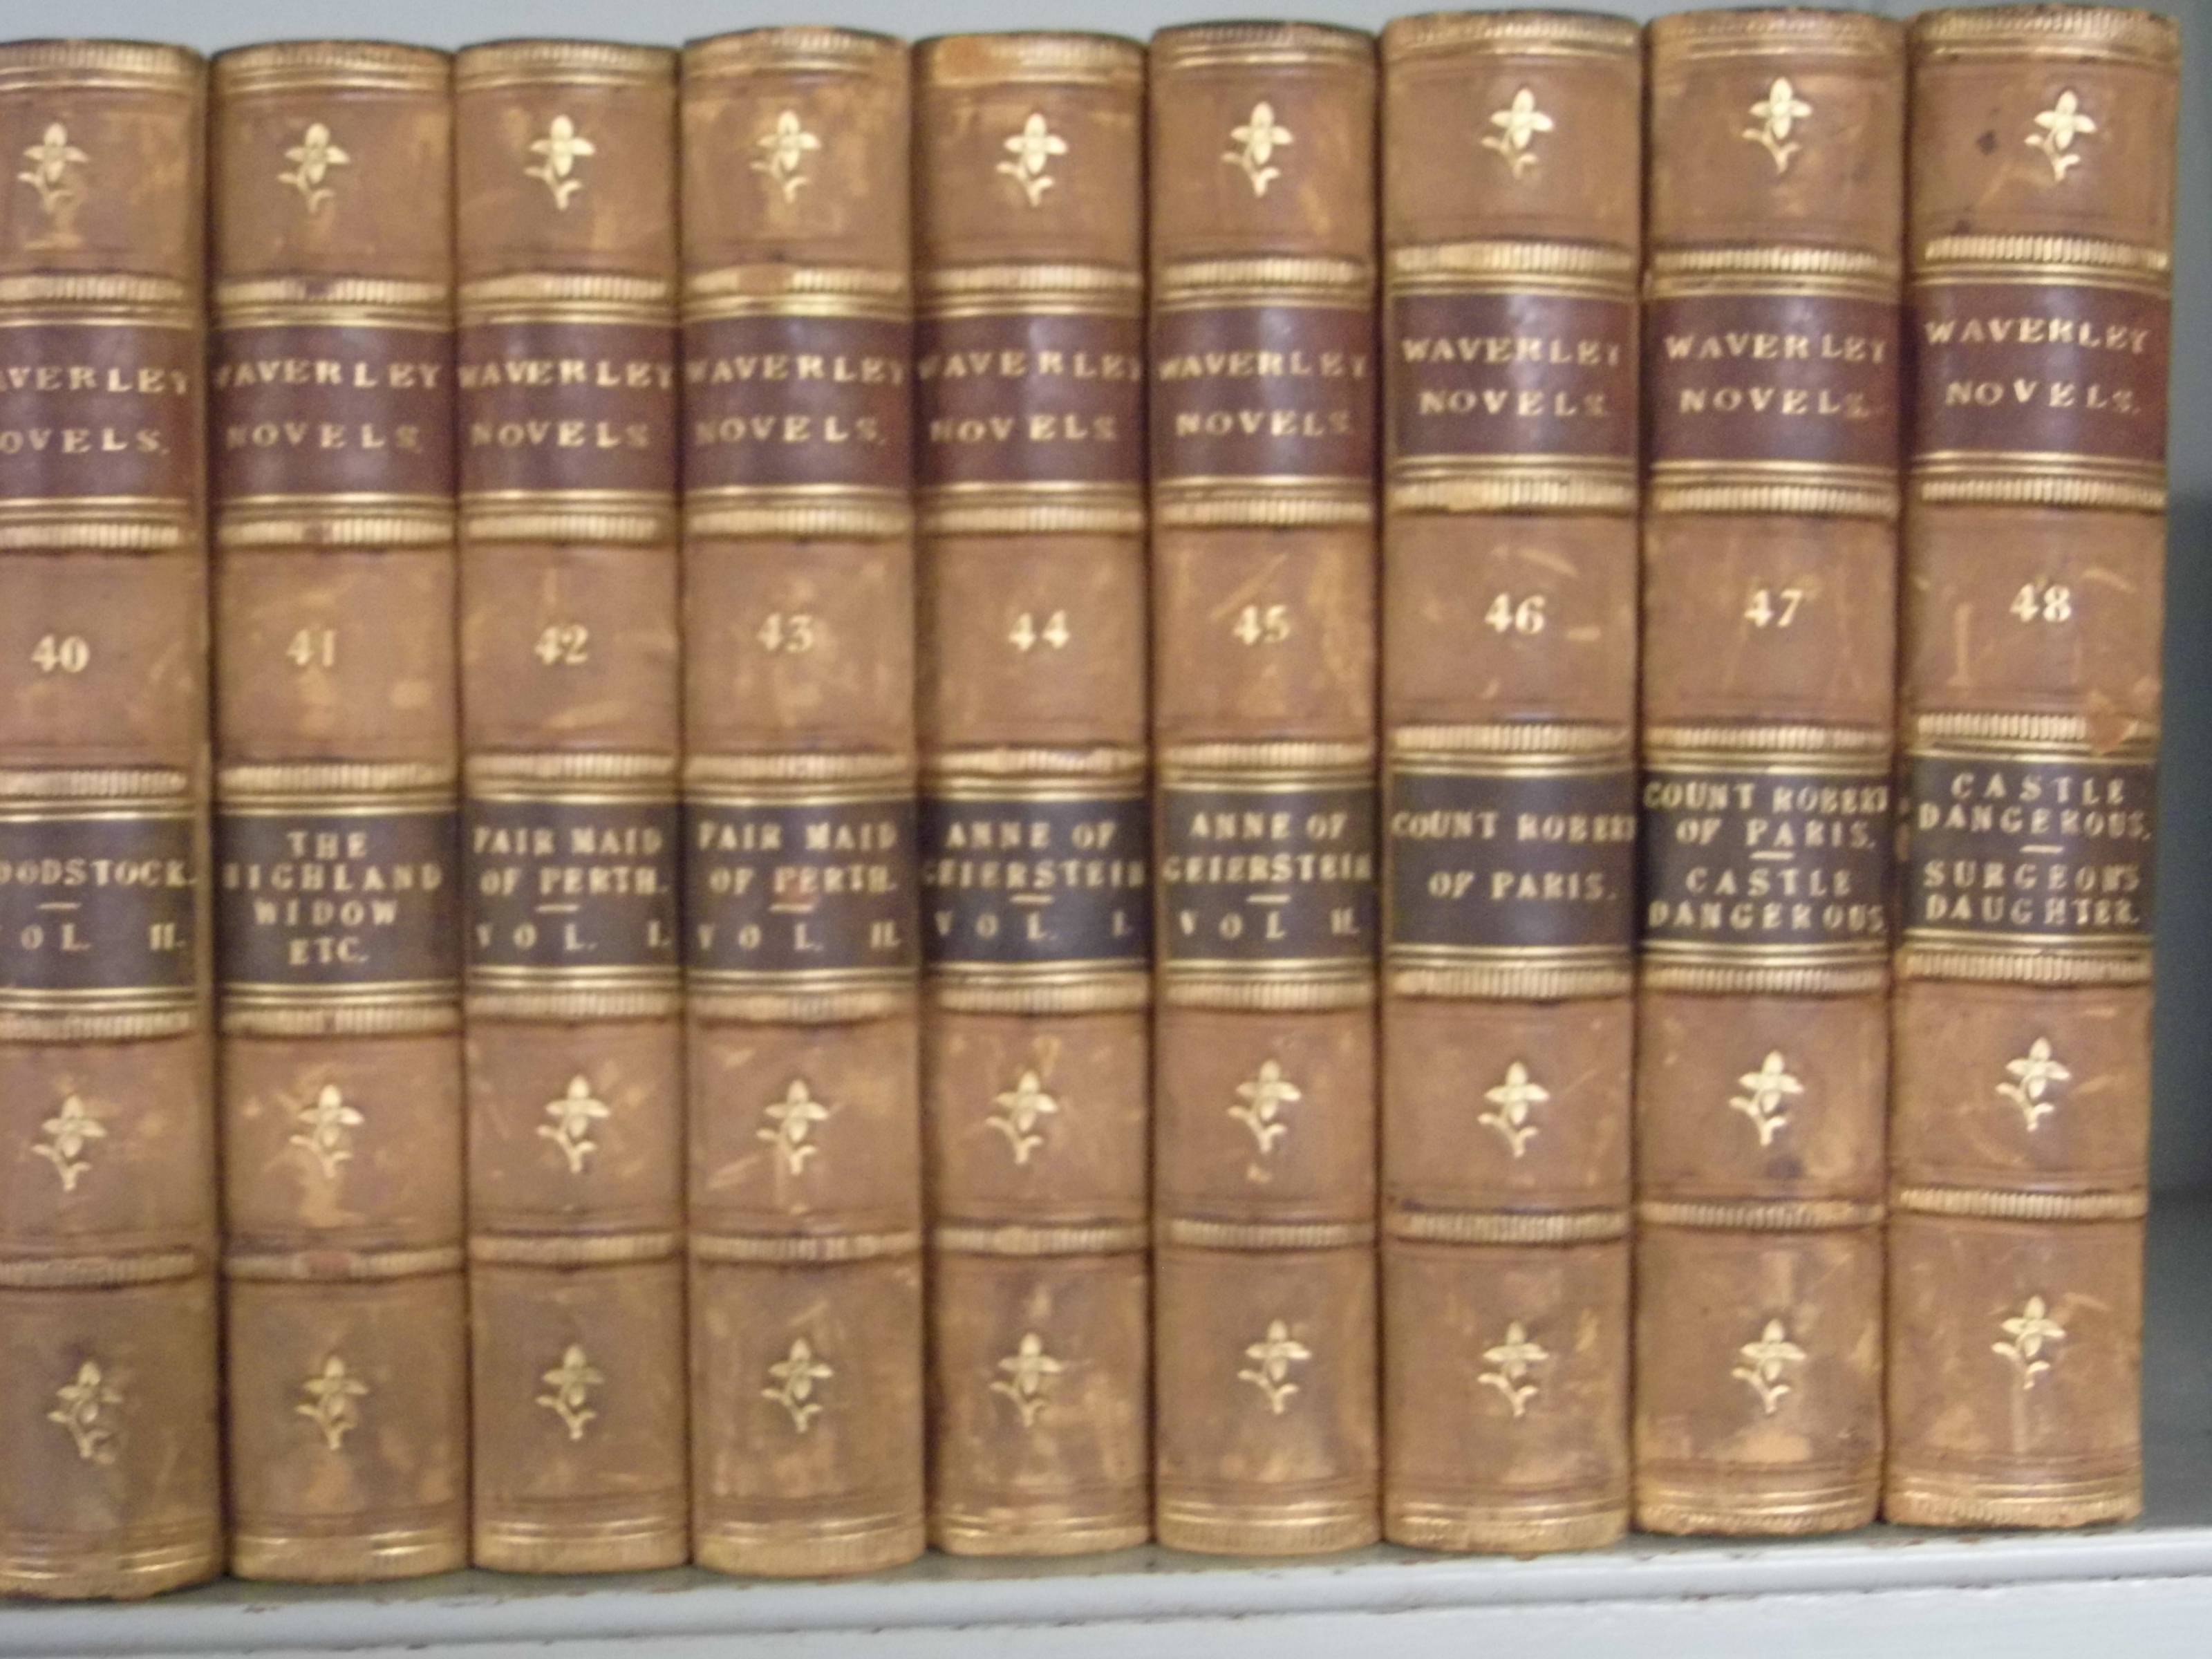 Scott (Walter). Waverley Novels, volumes 11-27 & 39-48 only, Edinburgh & London: Cadell, engraved - Image 3 of 3